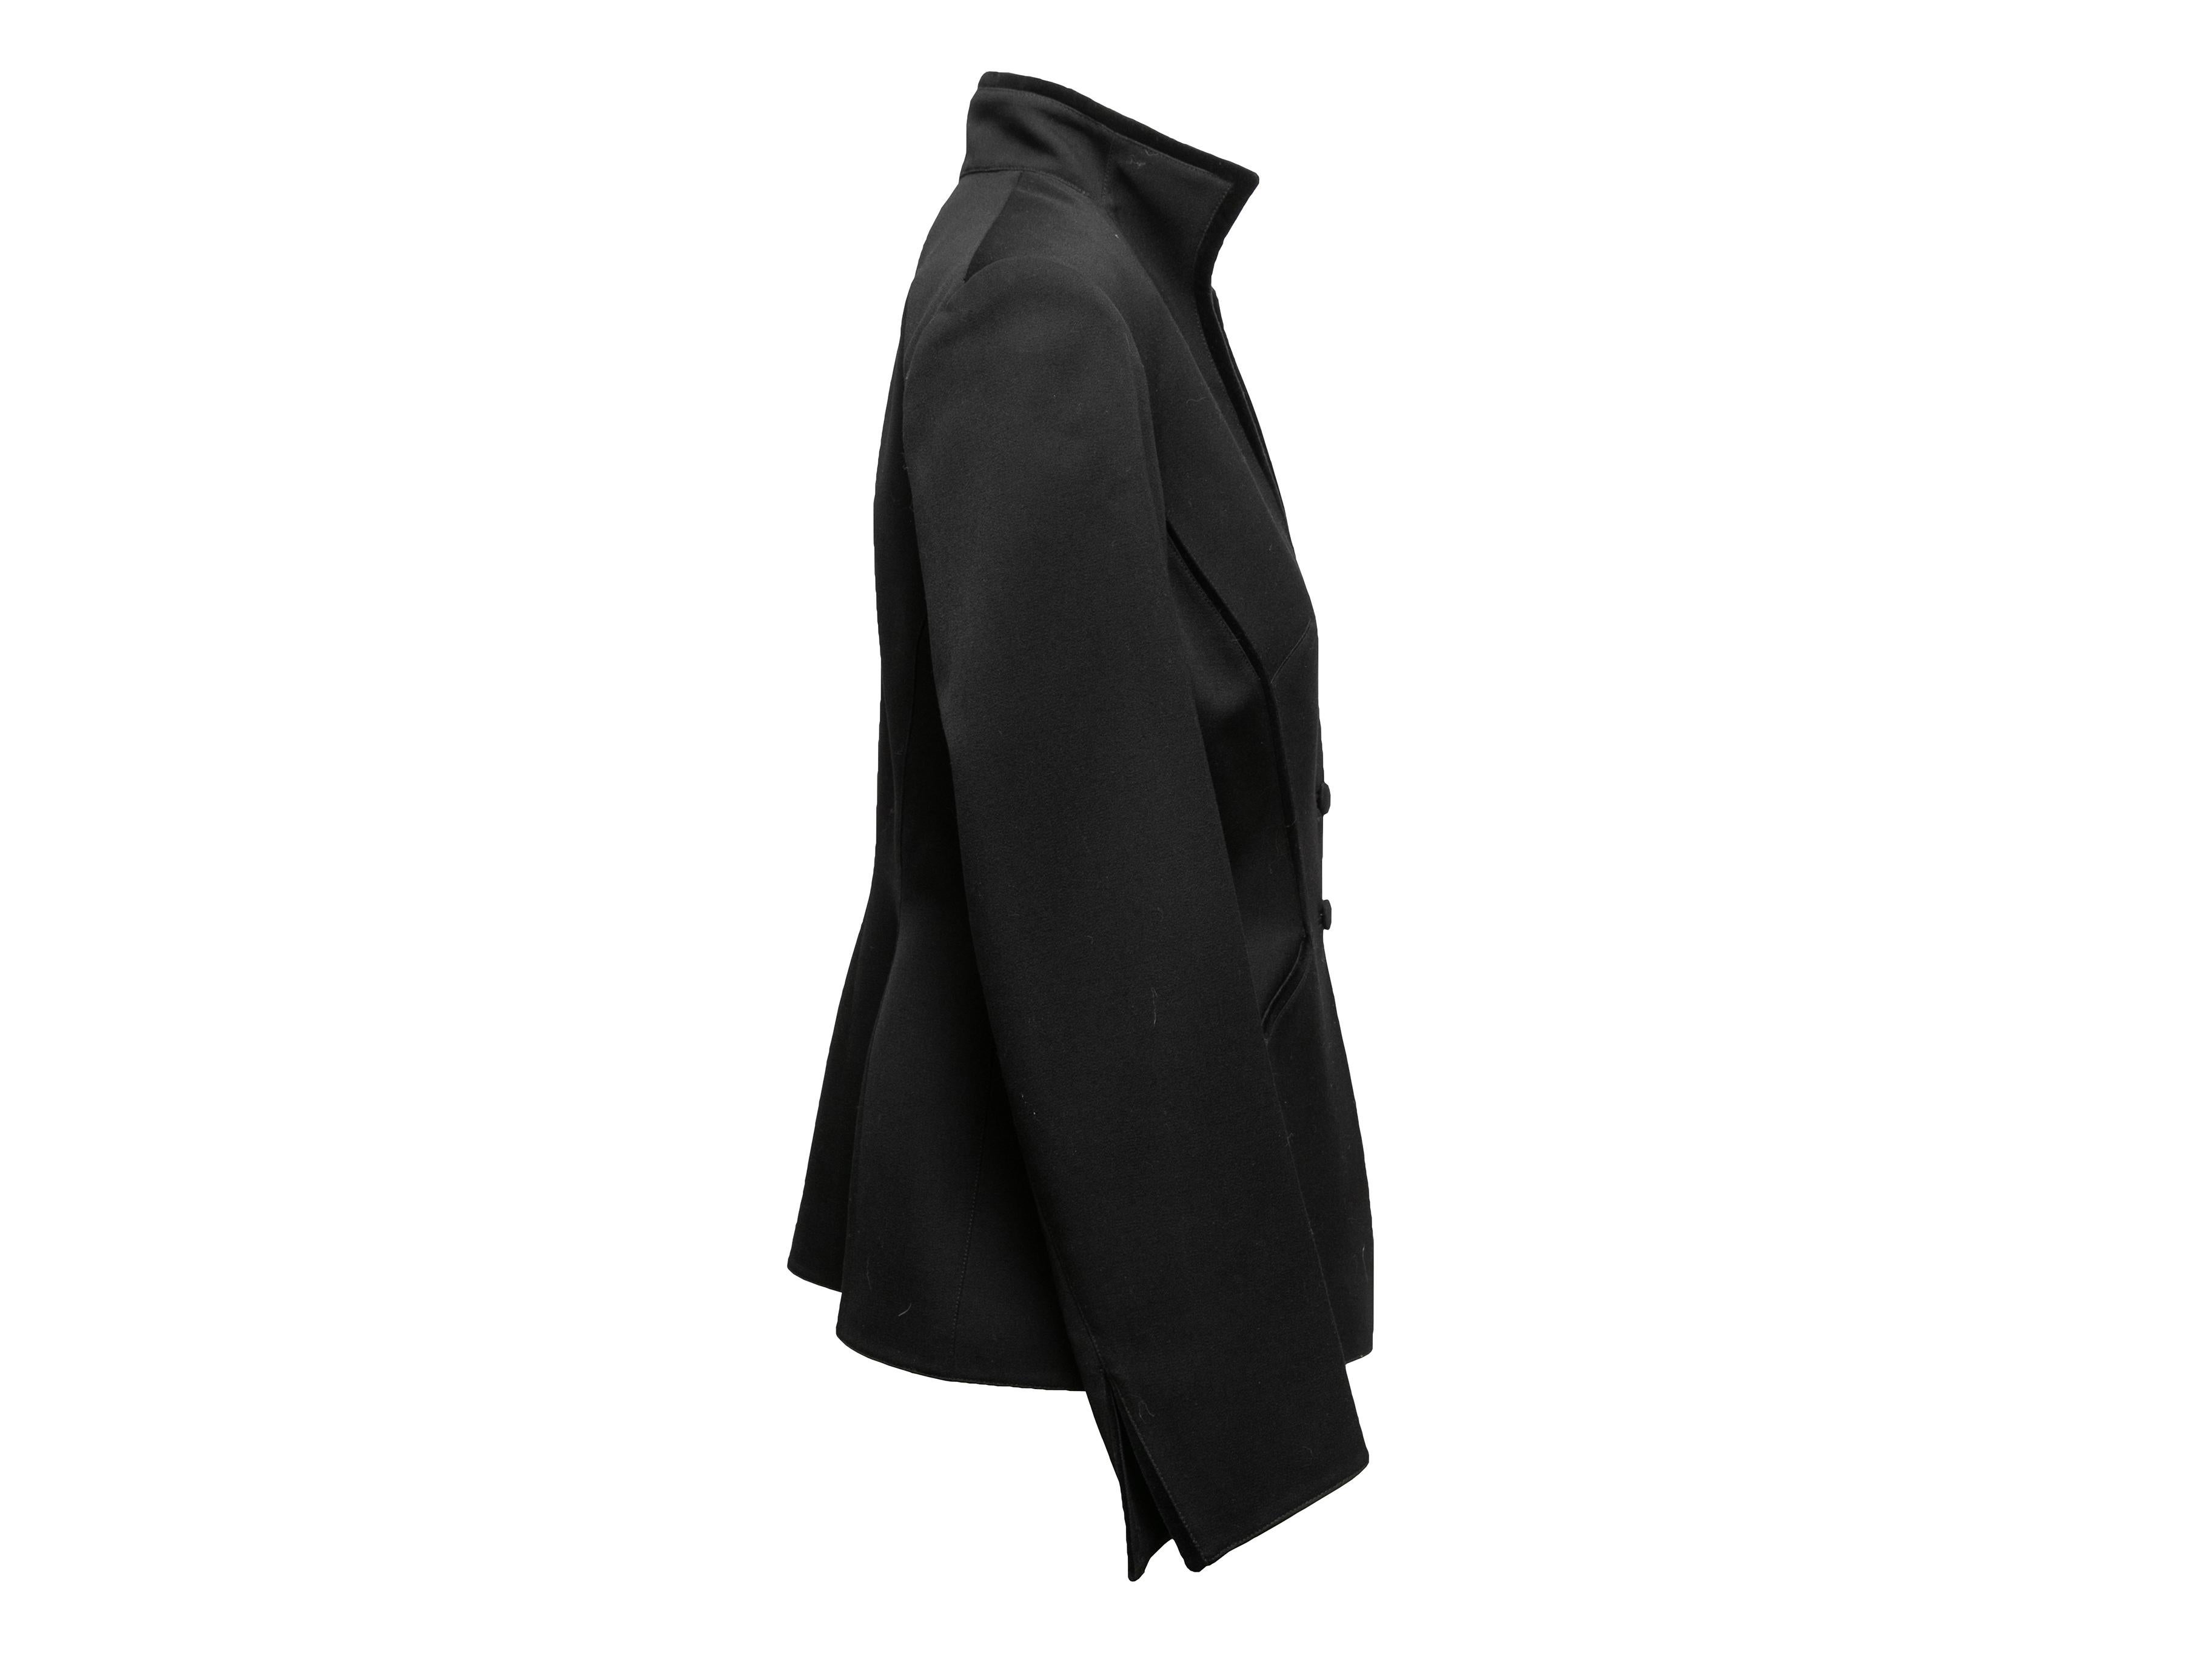 Vintage black V-neck blazer by Thierry Mugler. Velvet trim throughout. Pointed collar. Button closures at front. 38